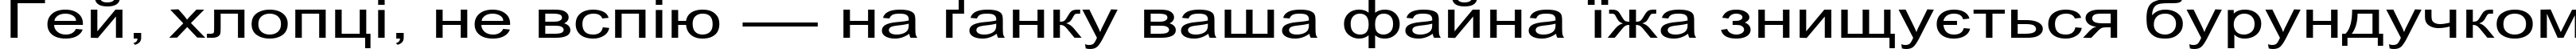 Пример написания шрифтом Arial Cyr140n текста на украинском